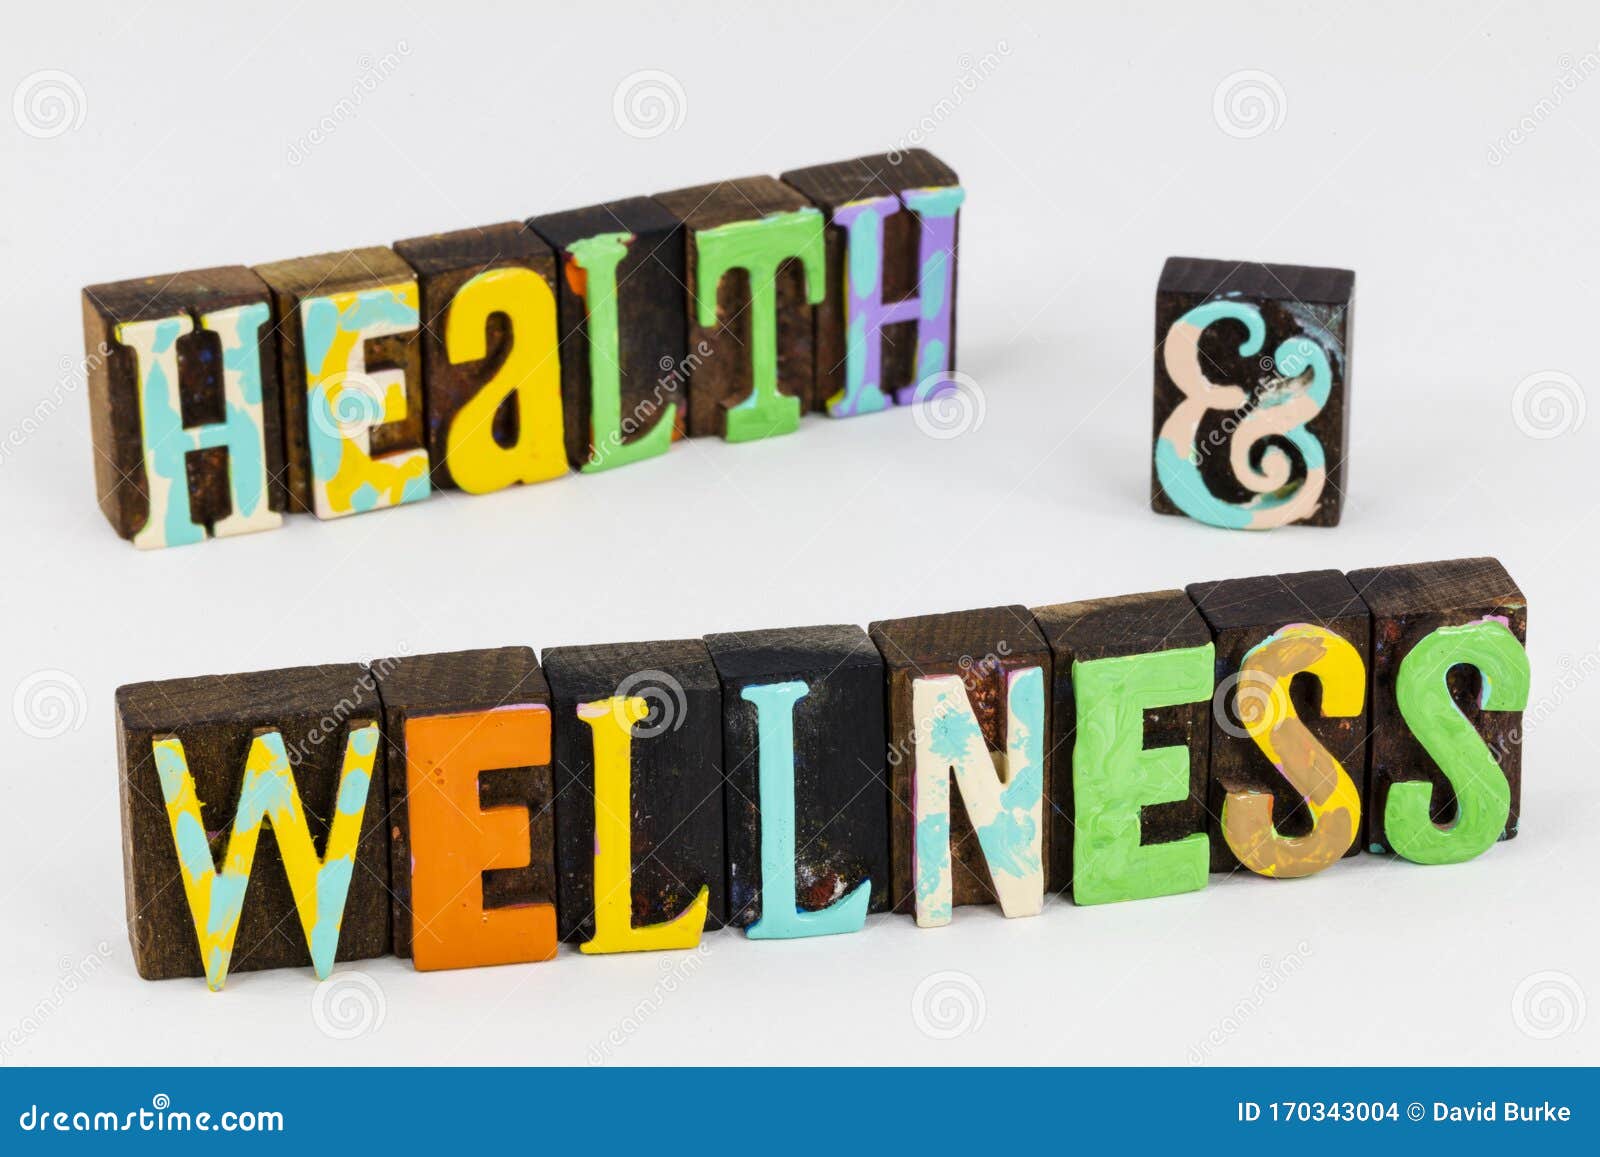 health wellness healthy physical fitness mind body soul spirit balance